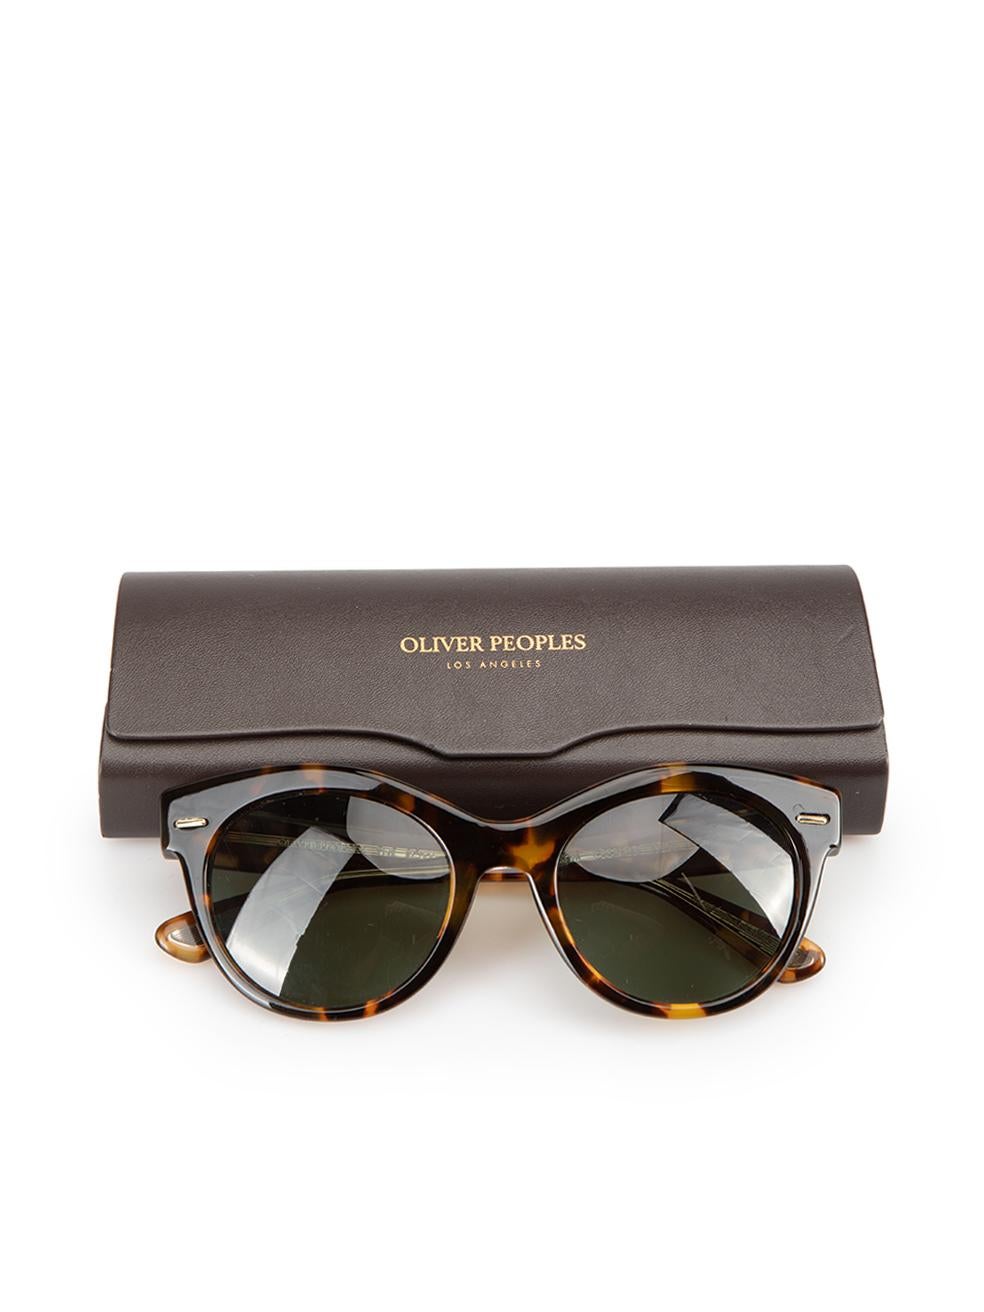 Oliver Peoples Women's Brown Tortoiseshell Cat Eye Sunglasses 2